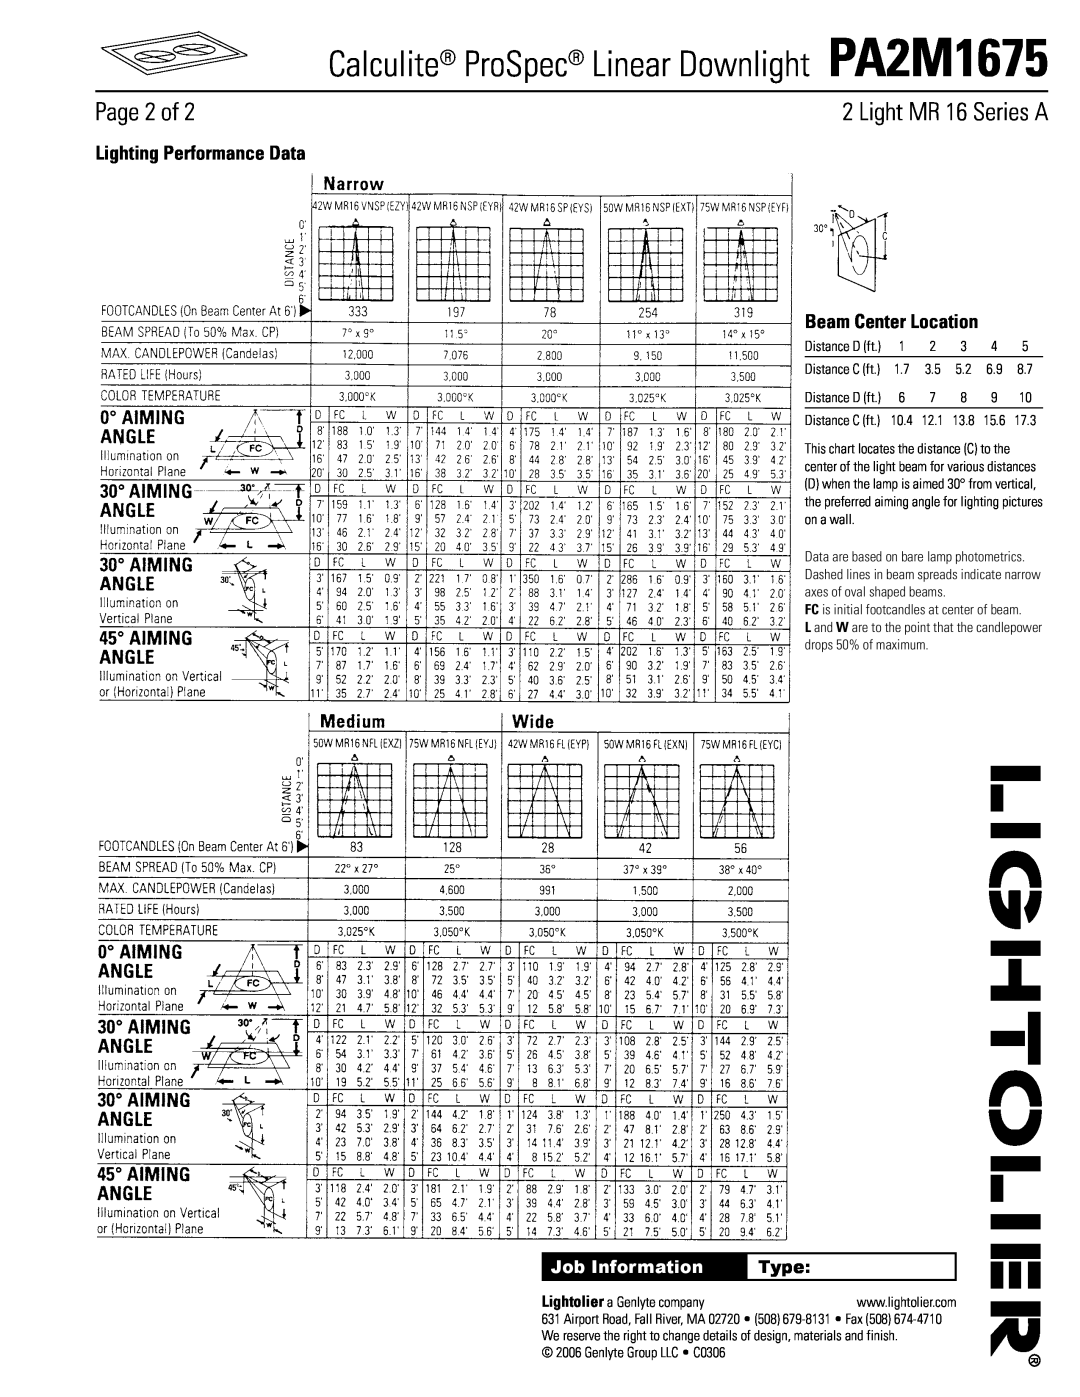 Lightolier Page 2 of, Lighting Performance Data Beam Center Location, Calculite ProSpec Linear Downlight PA2M1675, Type 